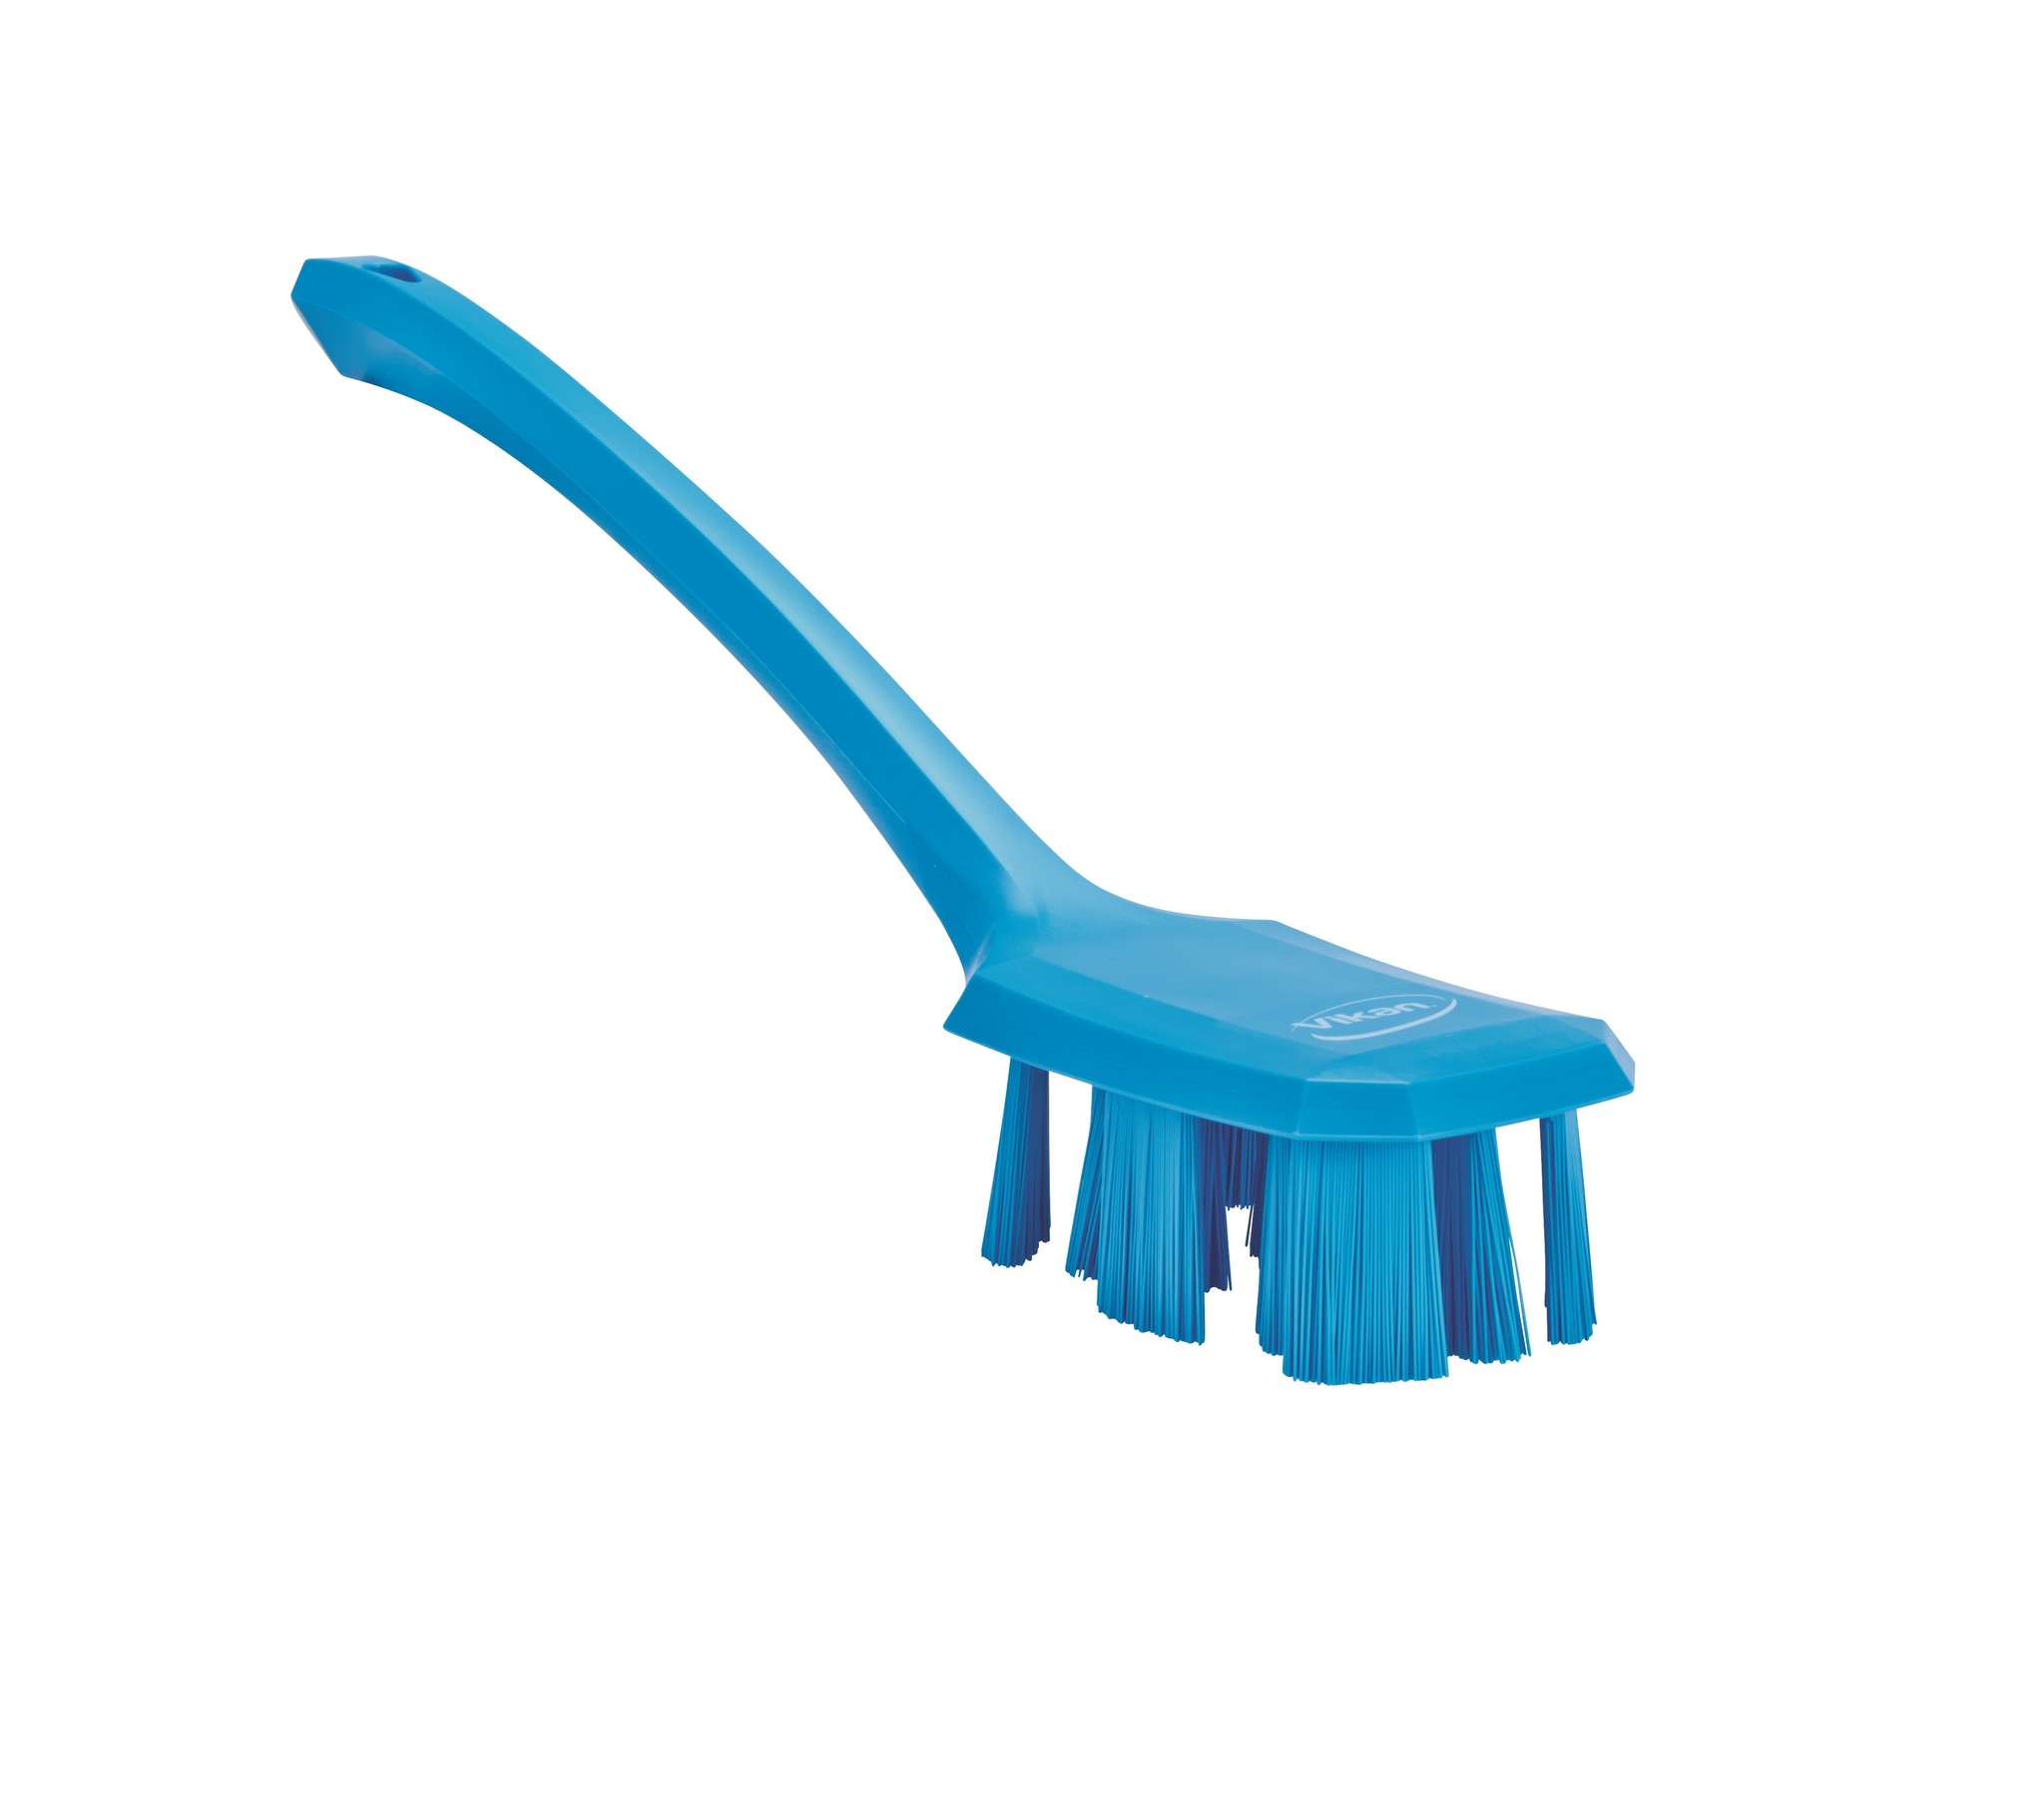 Vikan Vikan washing-up brush long, blue